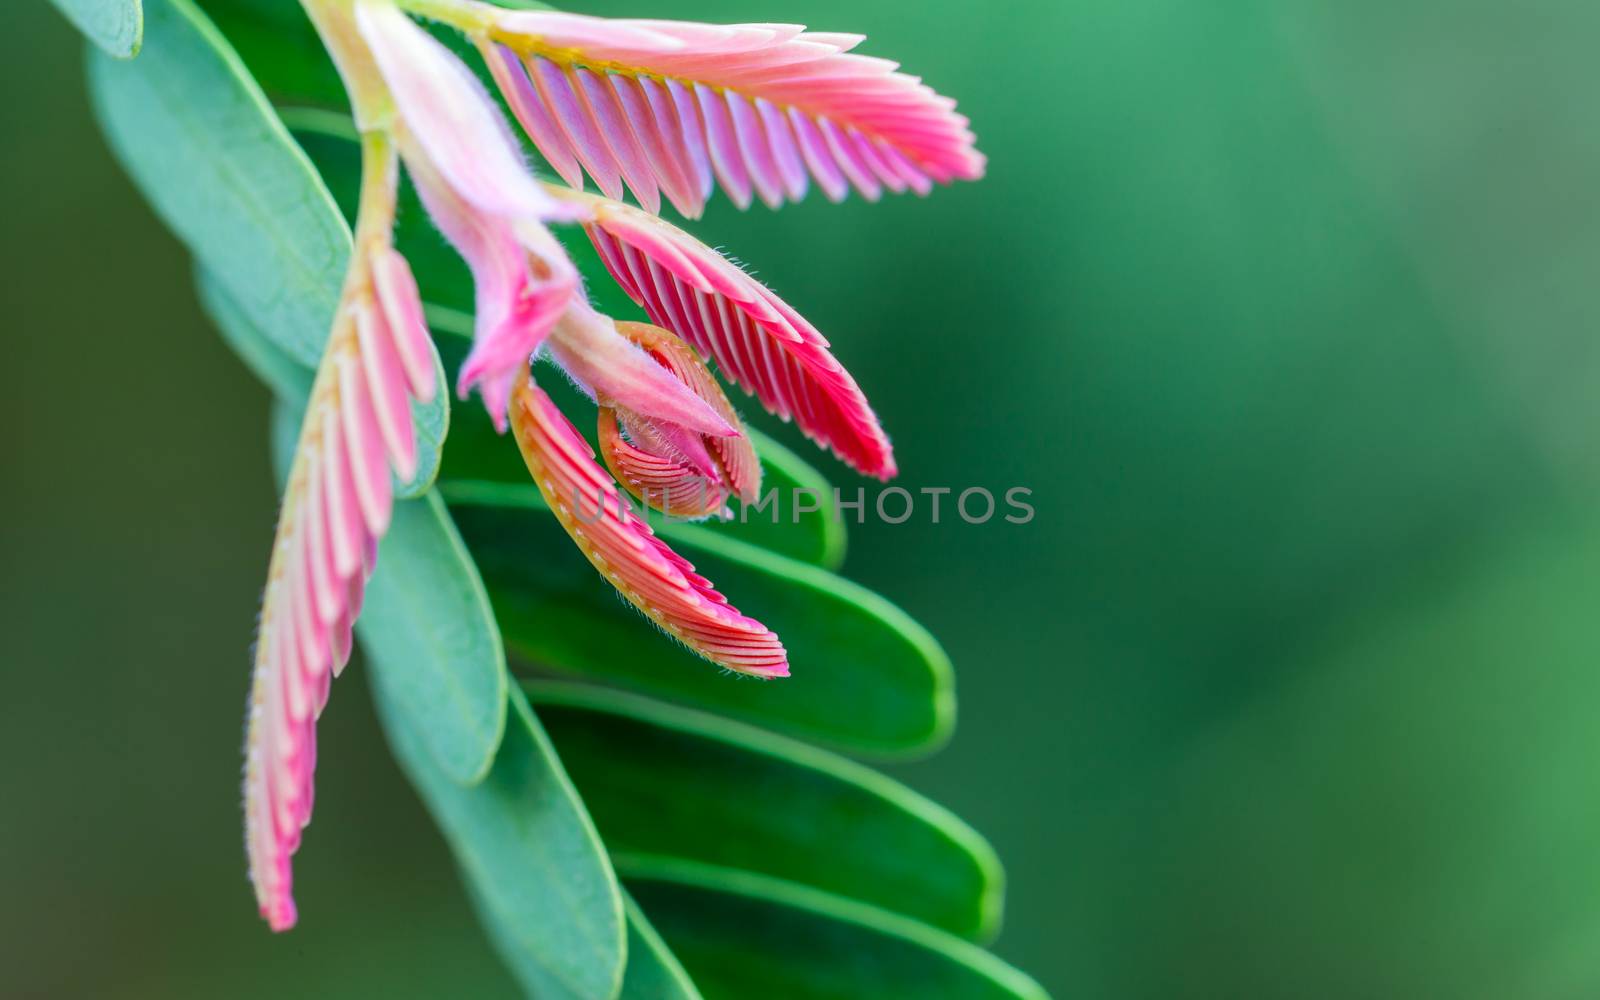 Tamarind spring. - Macro shot with selective focus by kerdkanno